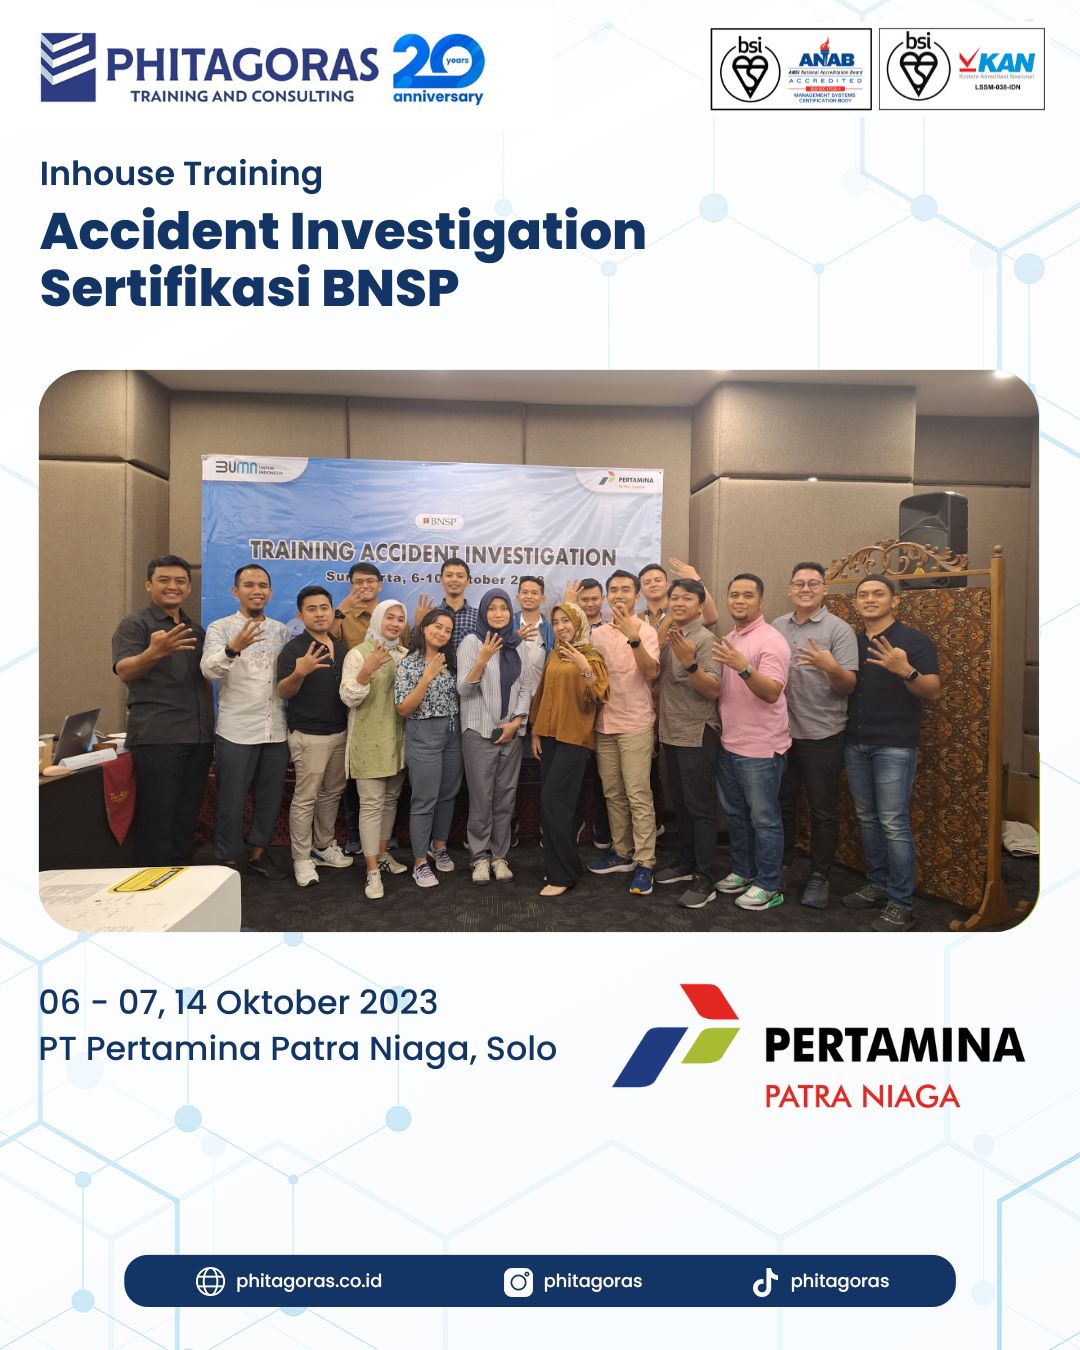 Inhouse Training Accident Investigation Sertifikasi BNSP - PT Pertamina Patra Niaga, Solo